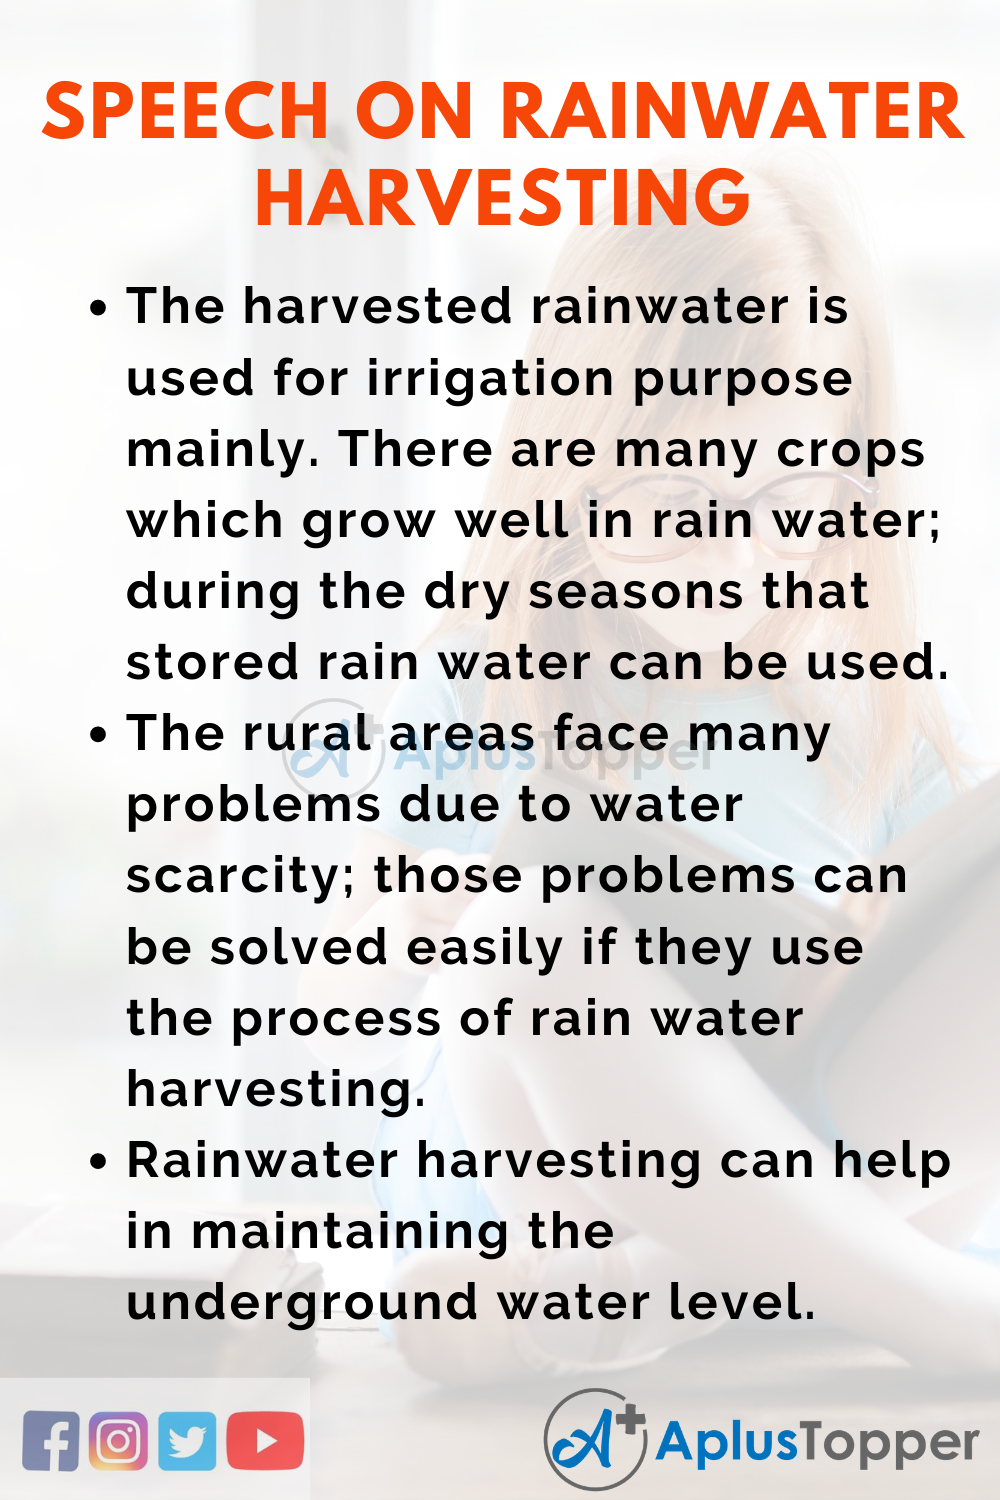 Short Speech On Rainwater Harvesting 150 Words In English